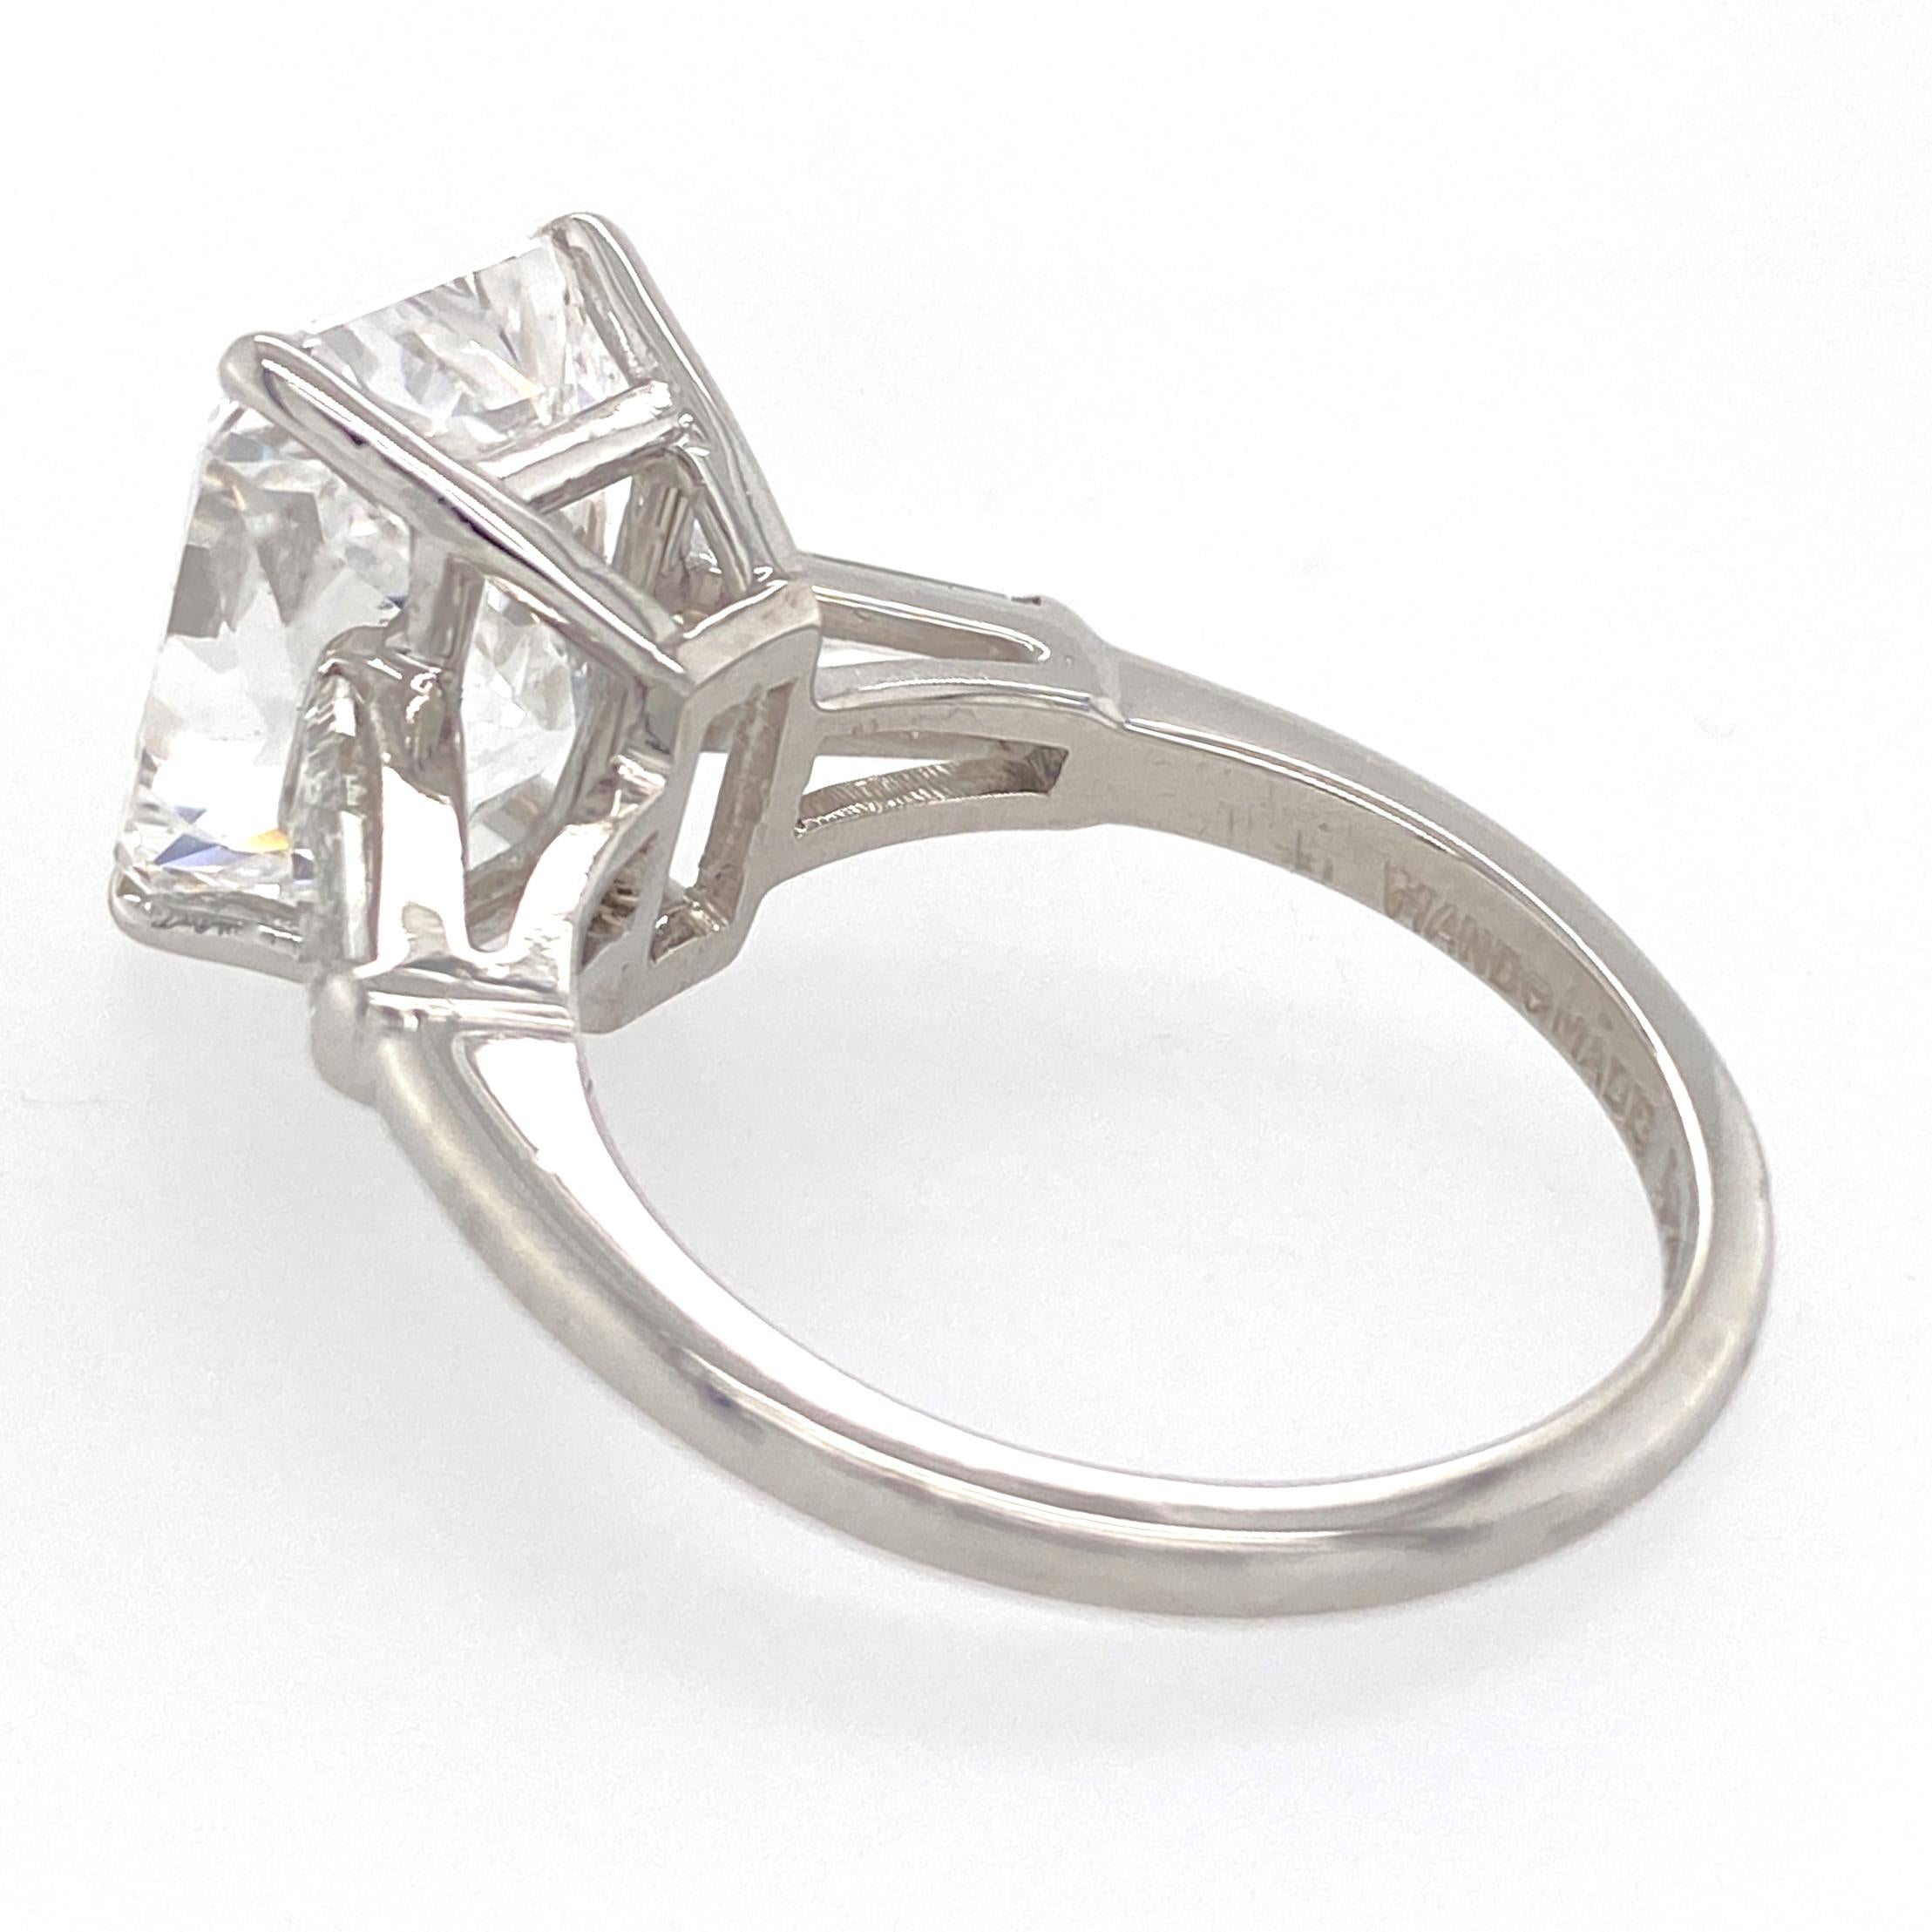 4.06 Carat E-VVS1 GIA Certified Radiant Cut Diamond in Deco-Era Platinum Ring 11